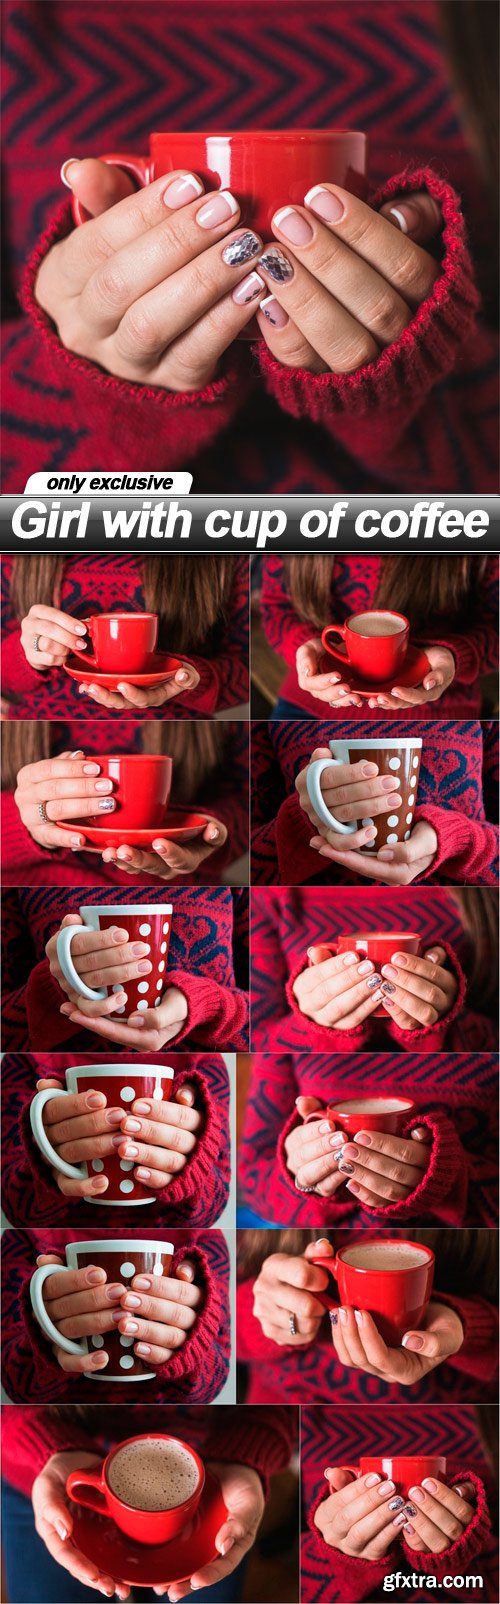 Girl with cup of coffee - 12 UHQ JPEG